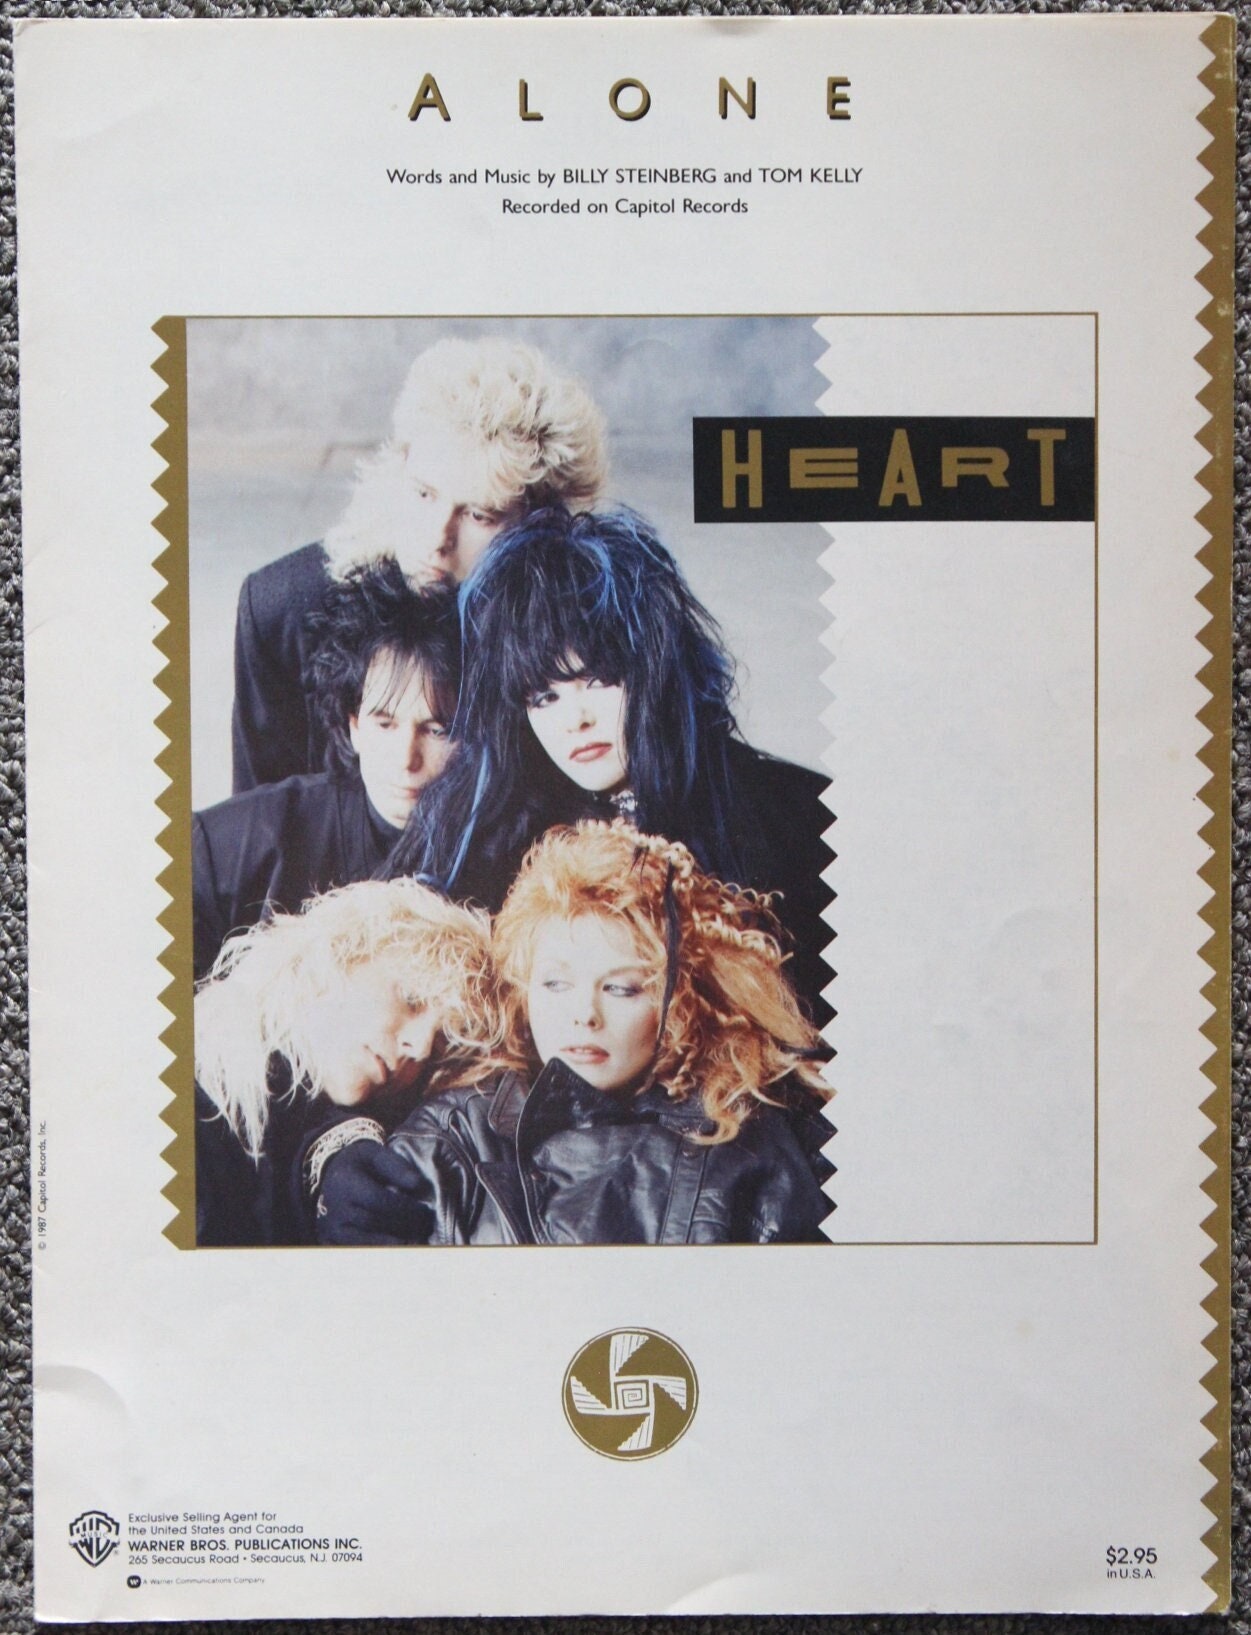 Heart - Alone (1987)